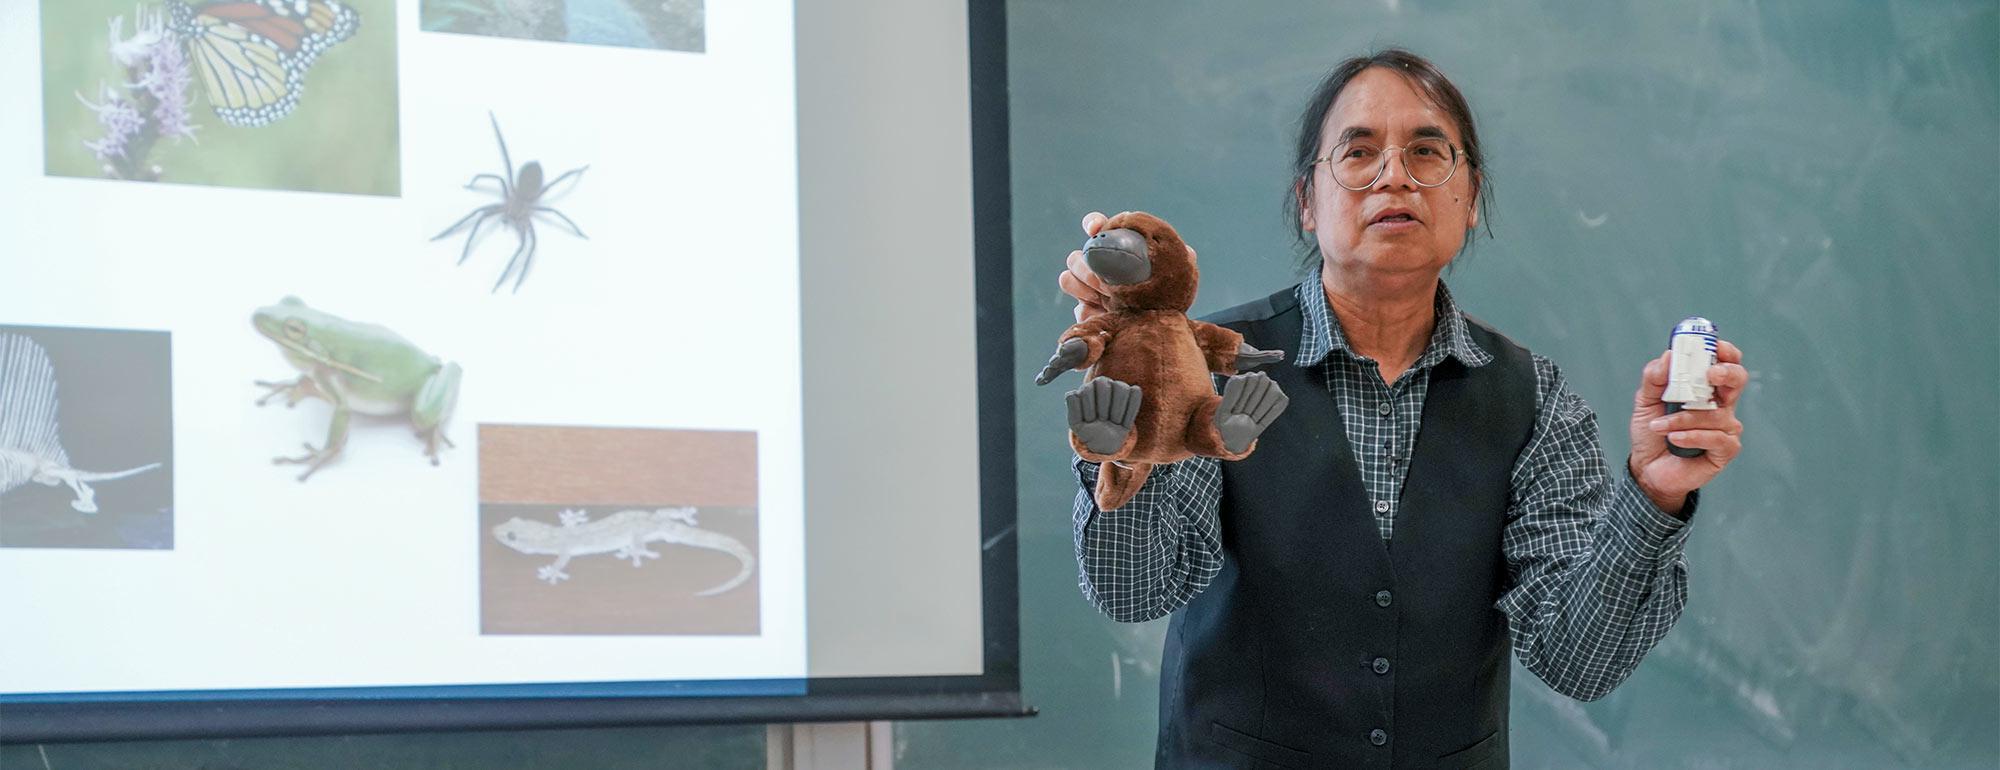 Professor Kyaw Tha Paw teaching a class on Land, Air, Water 资源